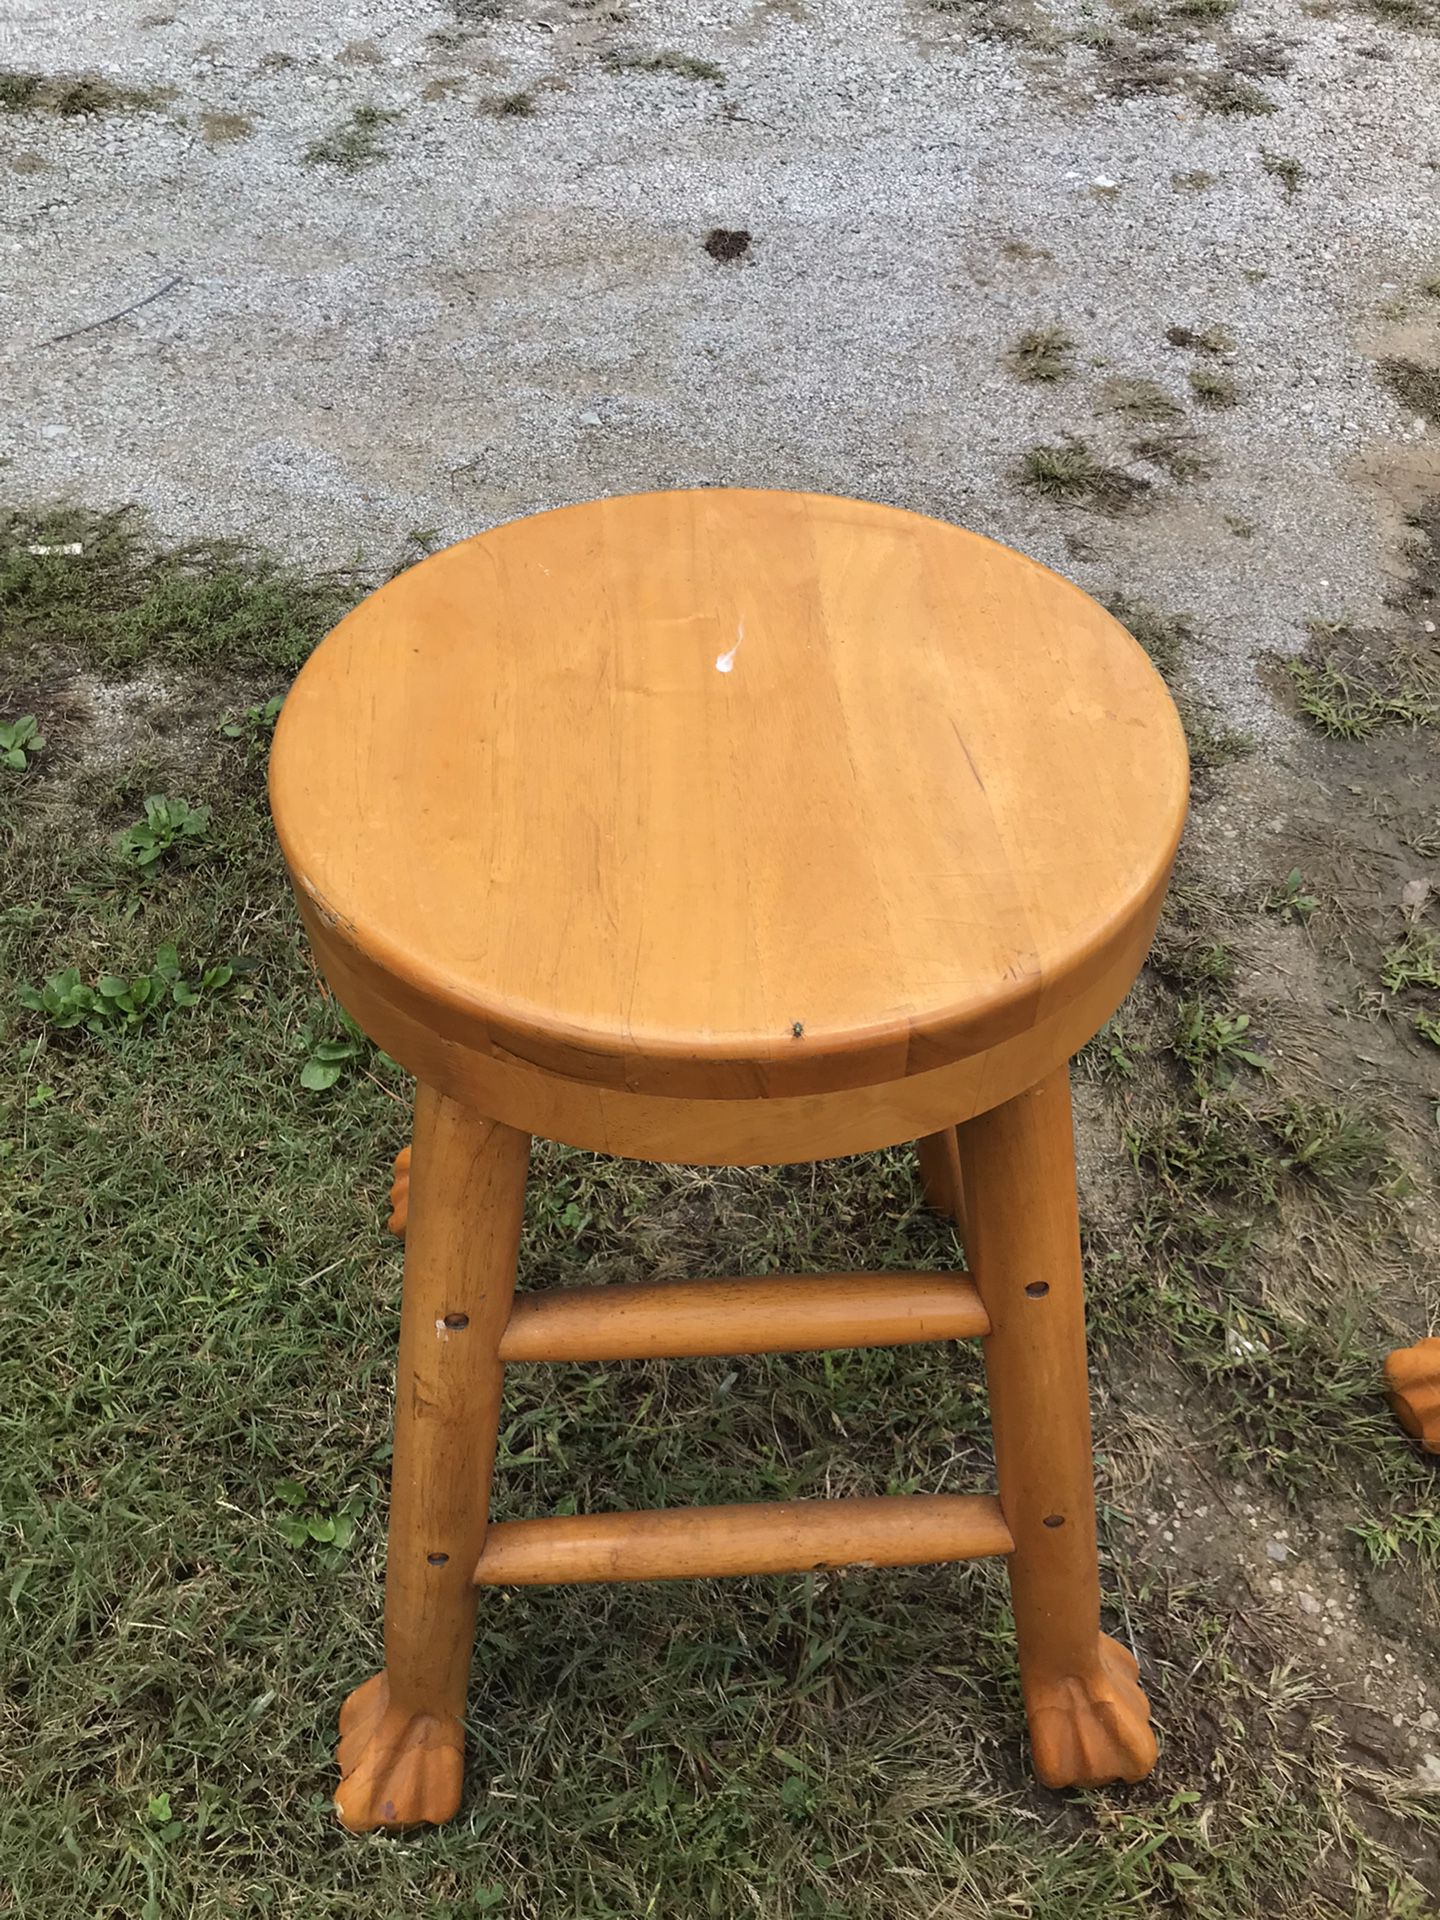 4 Good Takeh ardwood stools 40$ Or Best offer